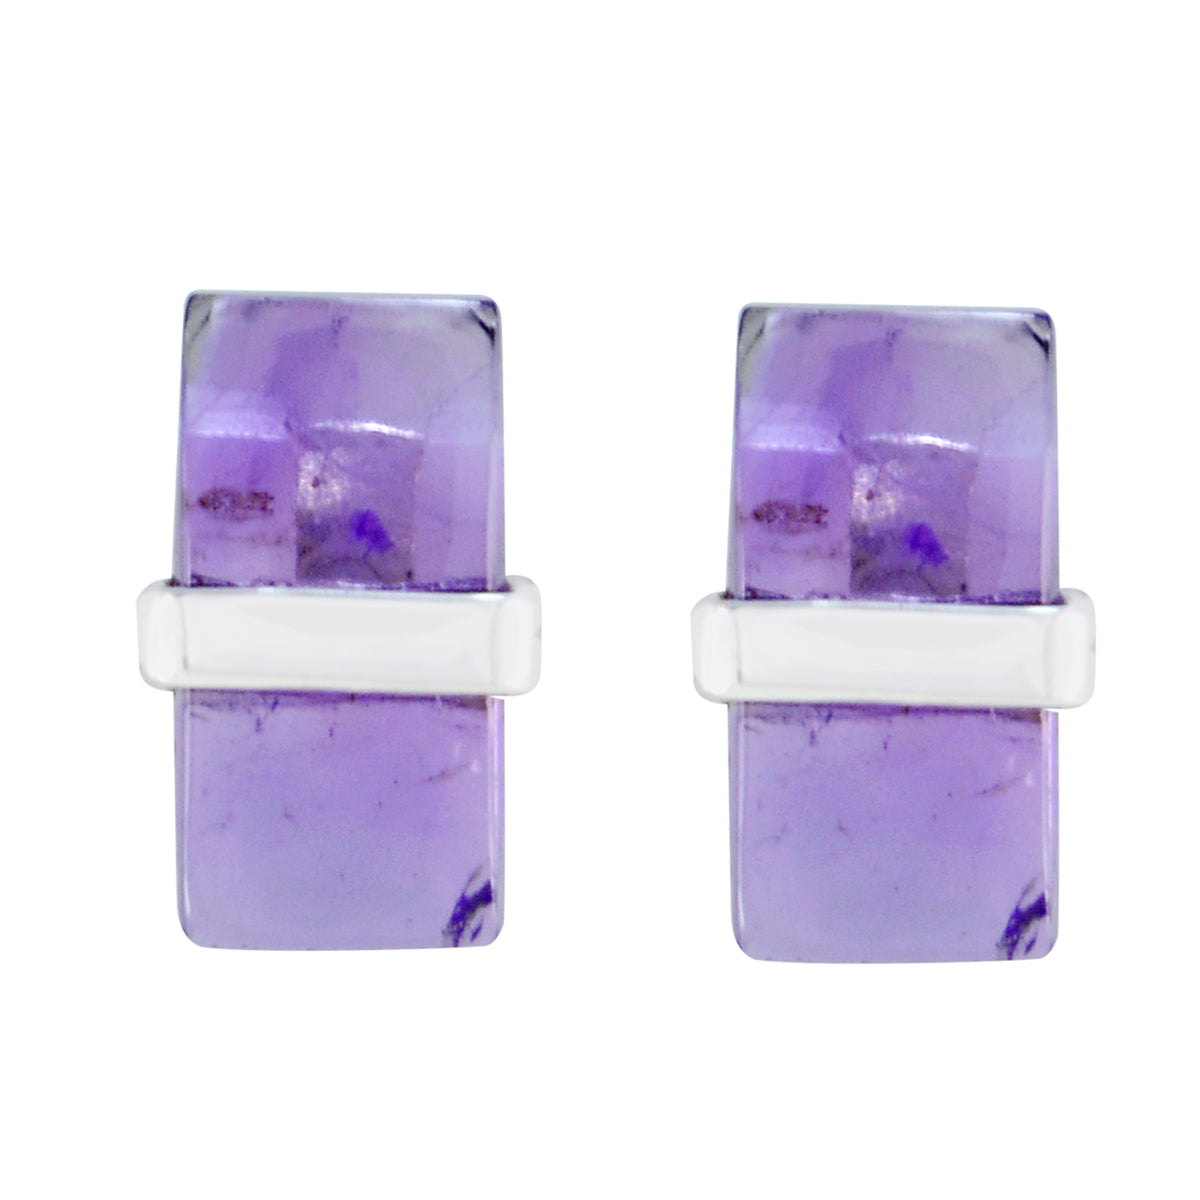 Riyo Genuine Gems baguette Cabochon Purple Amethyst Silver Earrings new years day gift